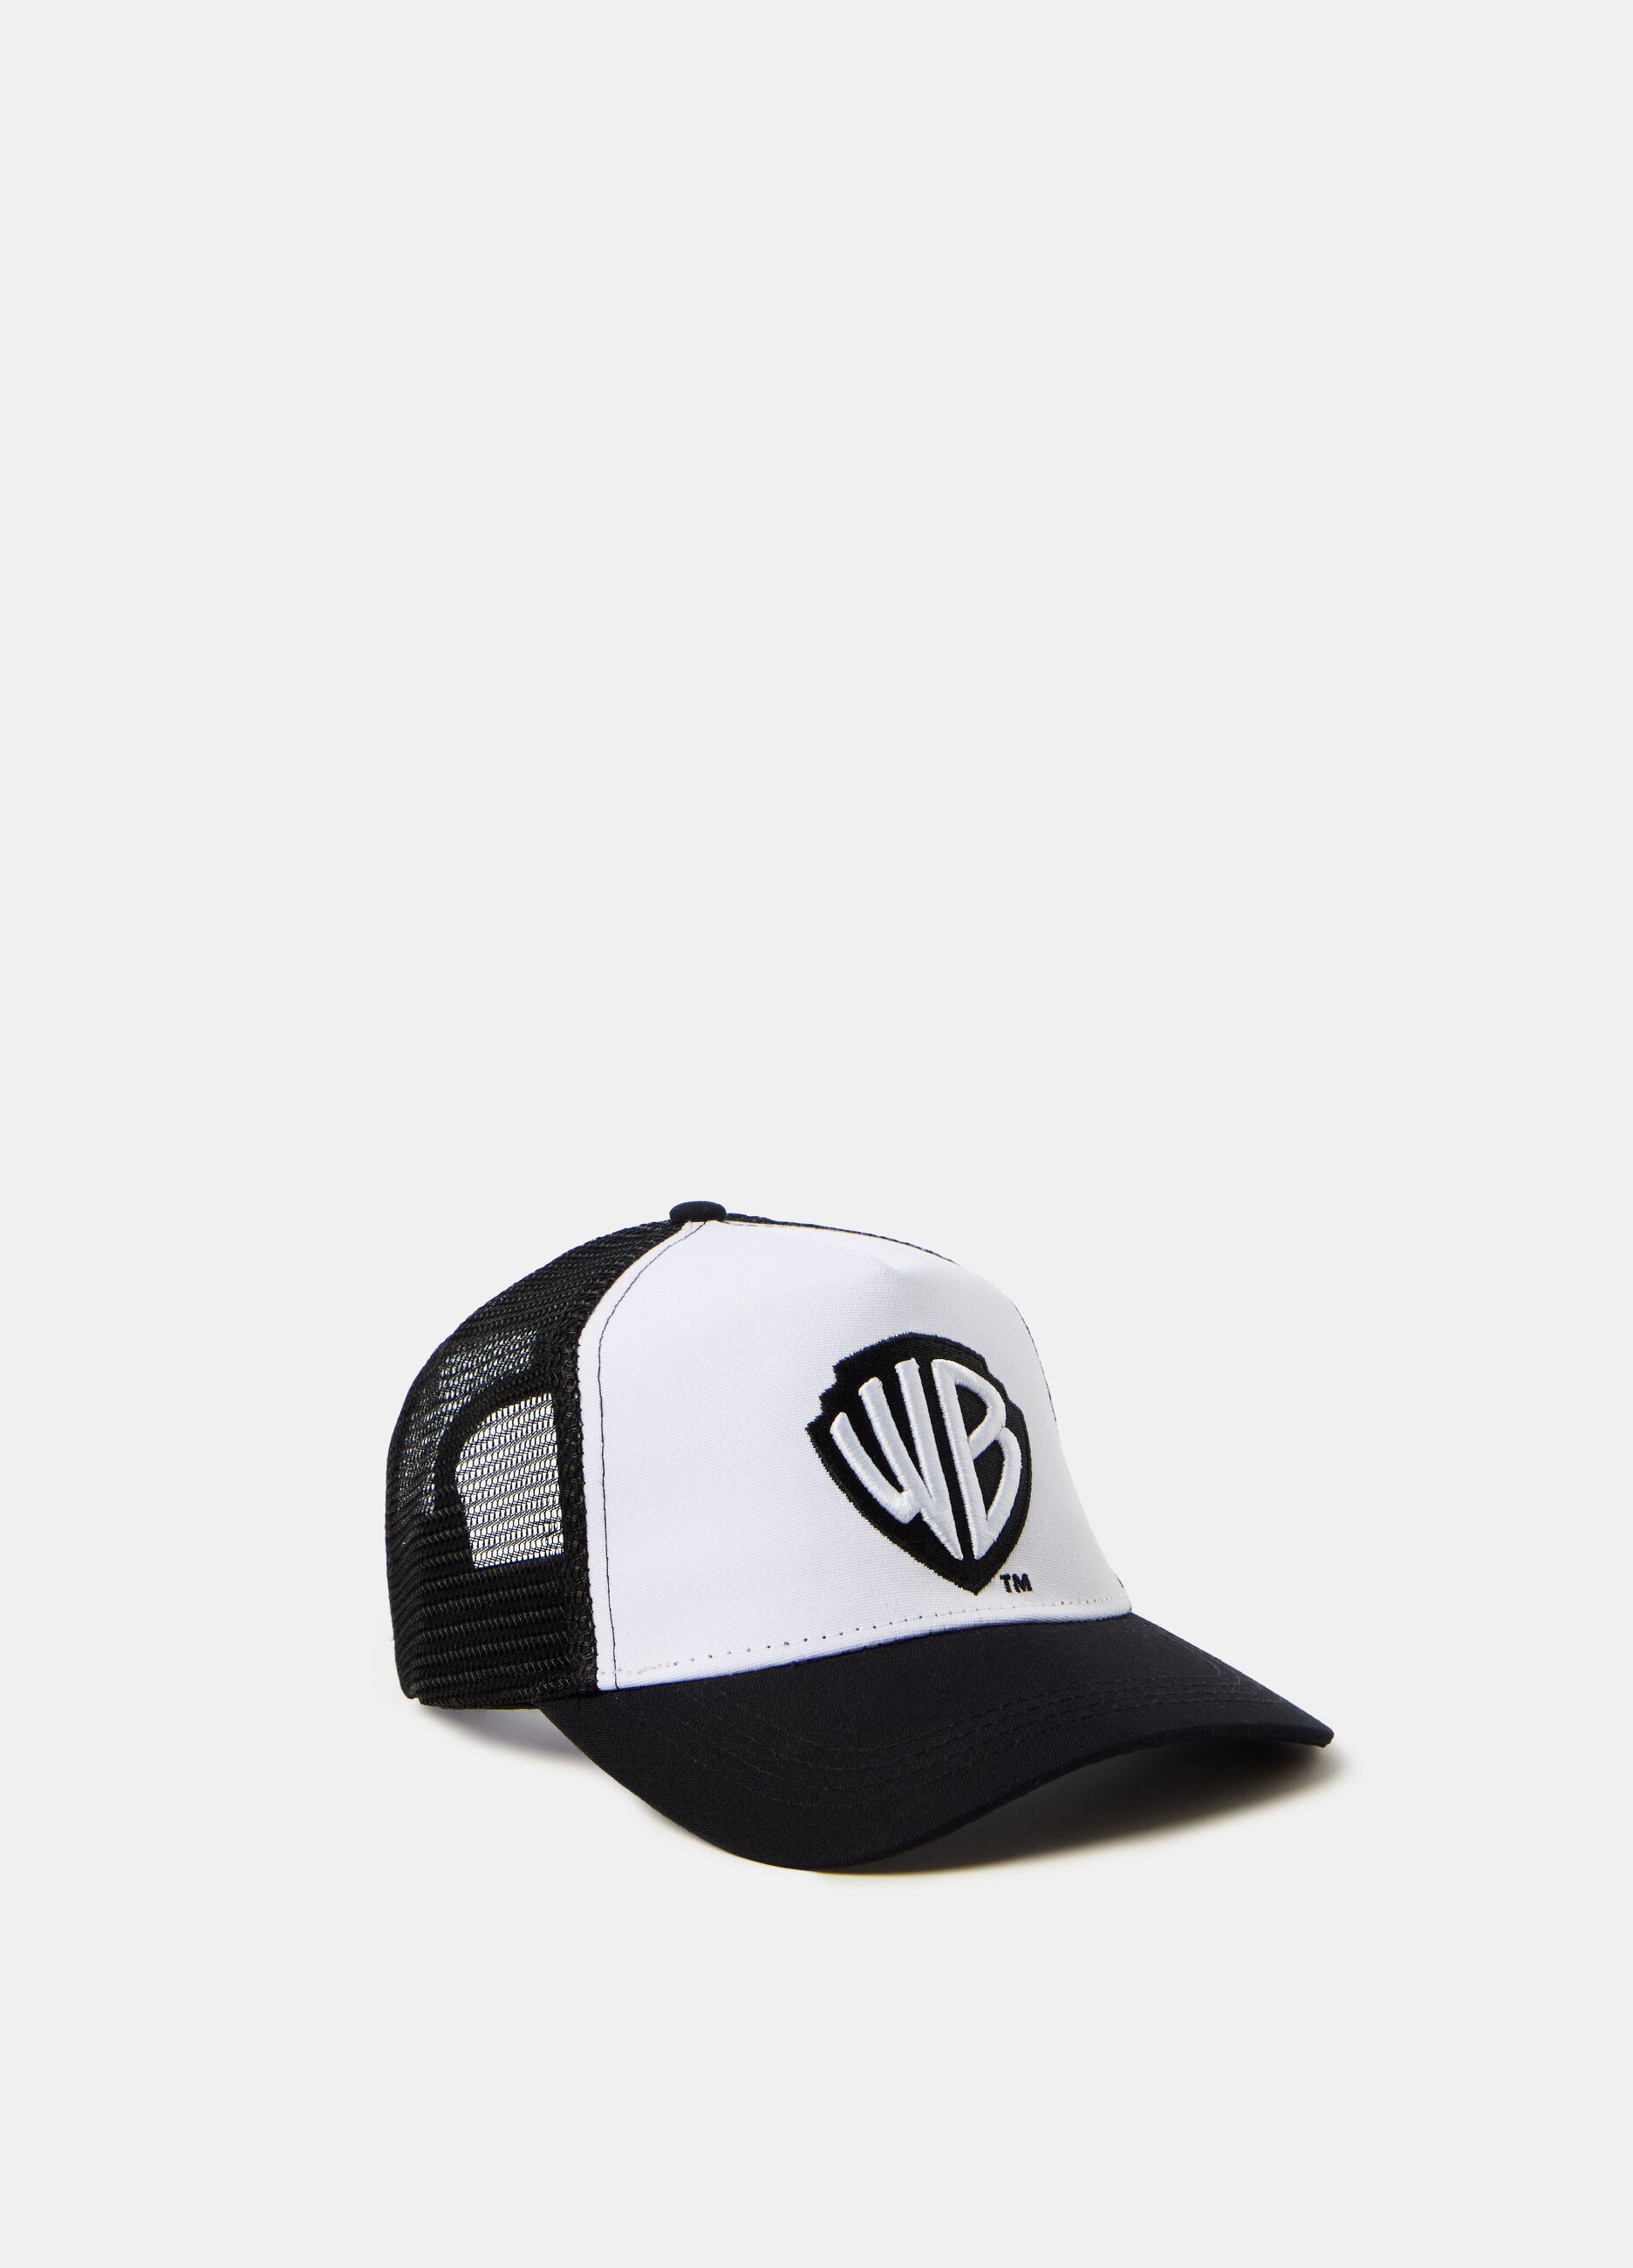 Baseball cap with Warner Bros logo